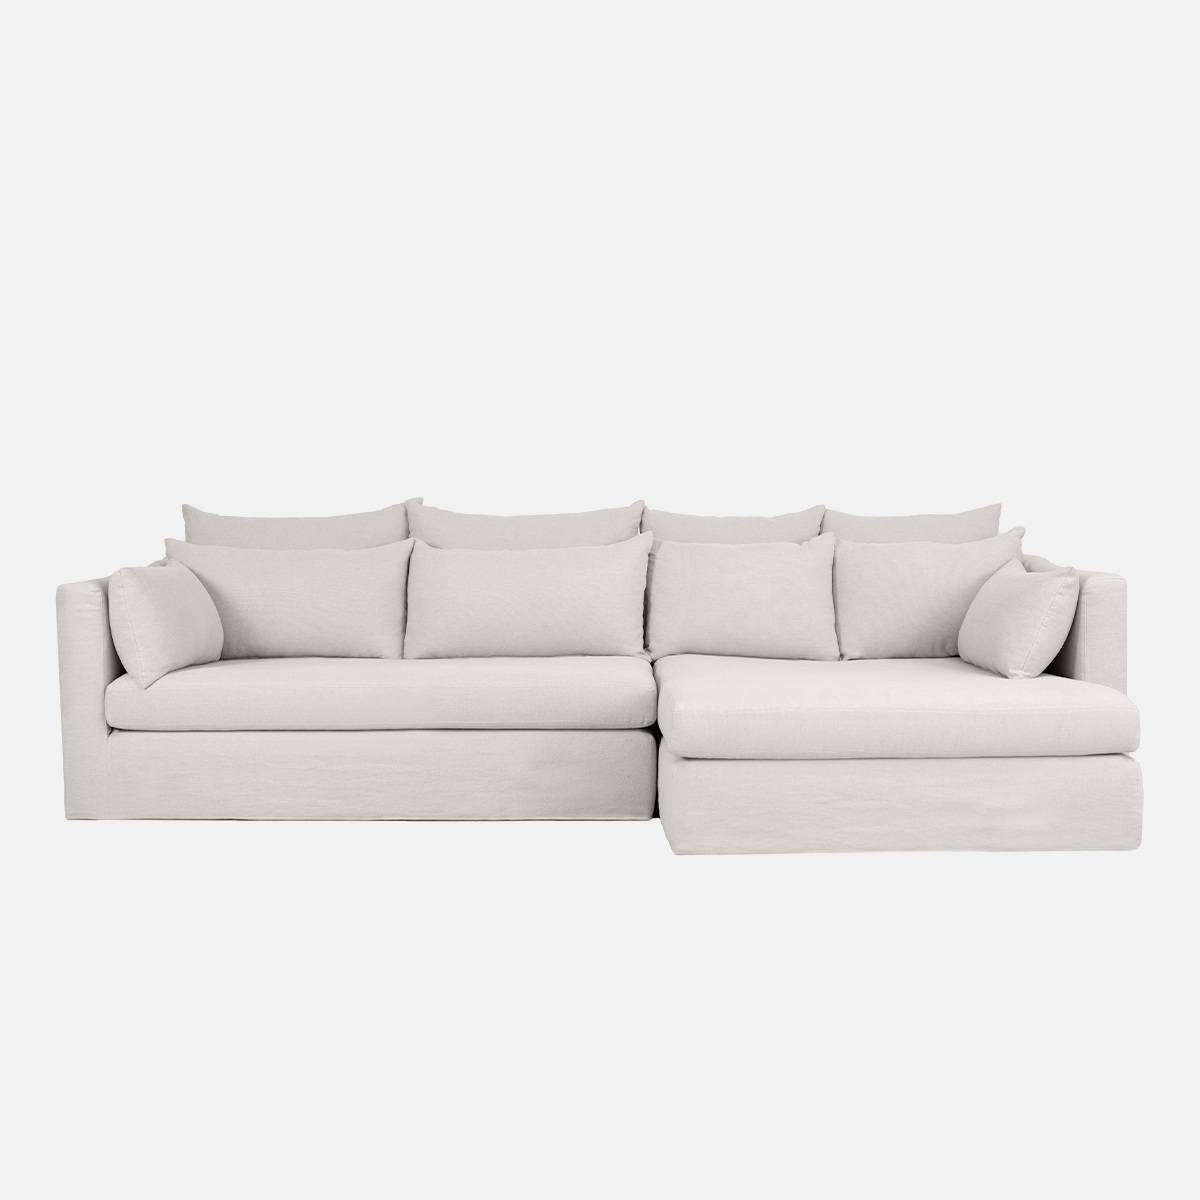 SuperBox corner sofa - Right angle, L300 x P180 x H85 cm - Linen - image 1